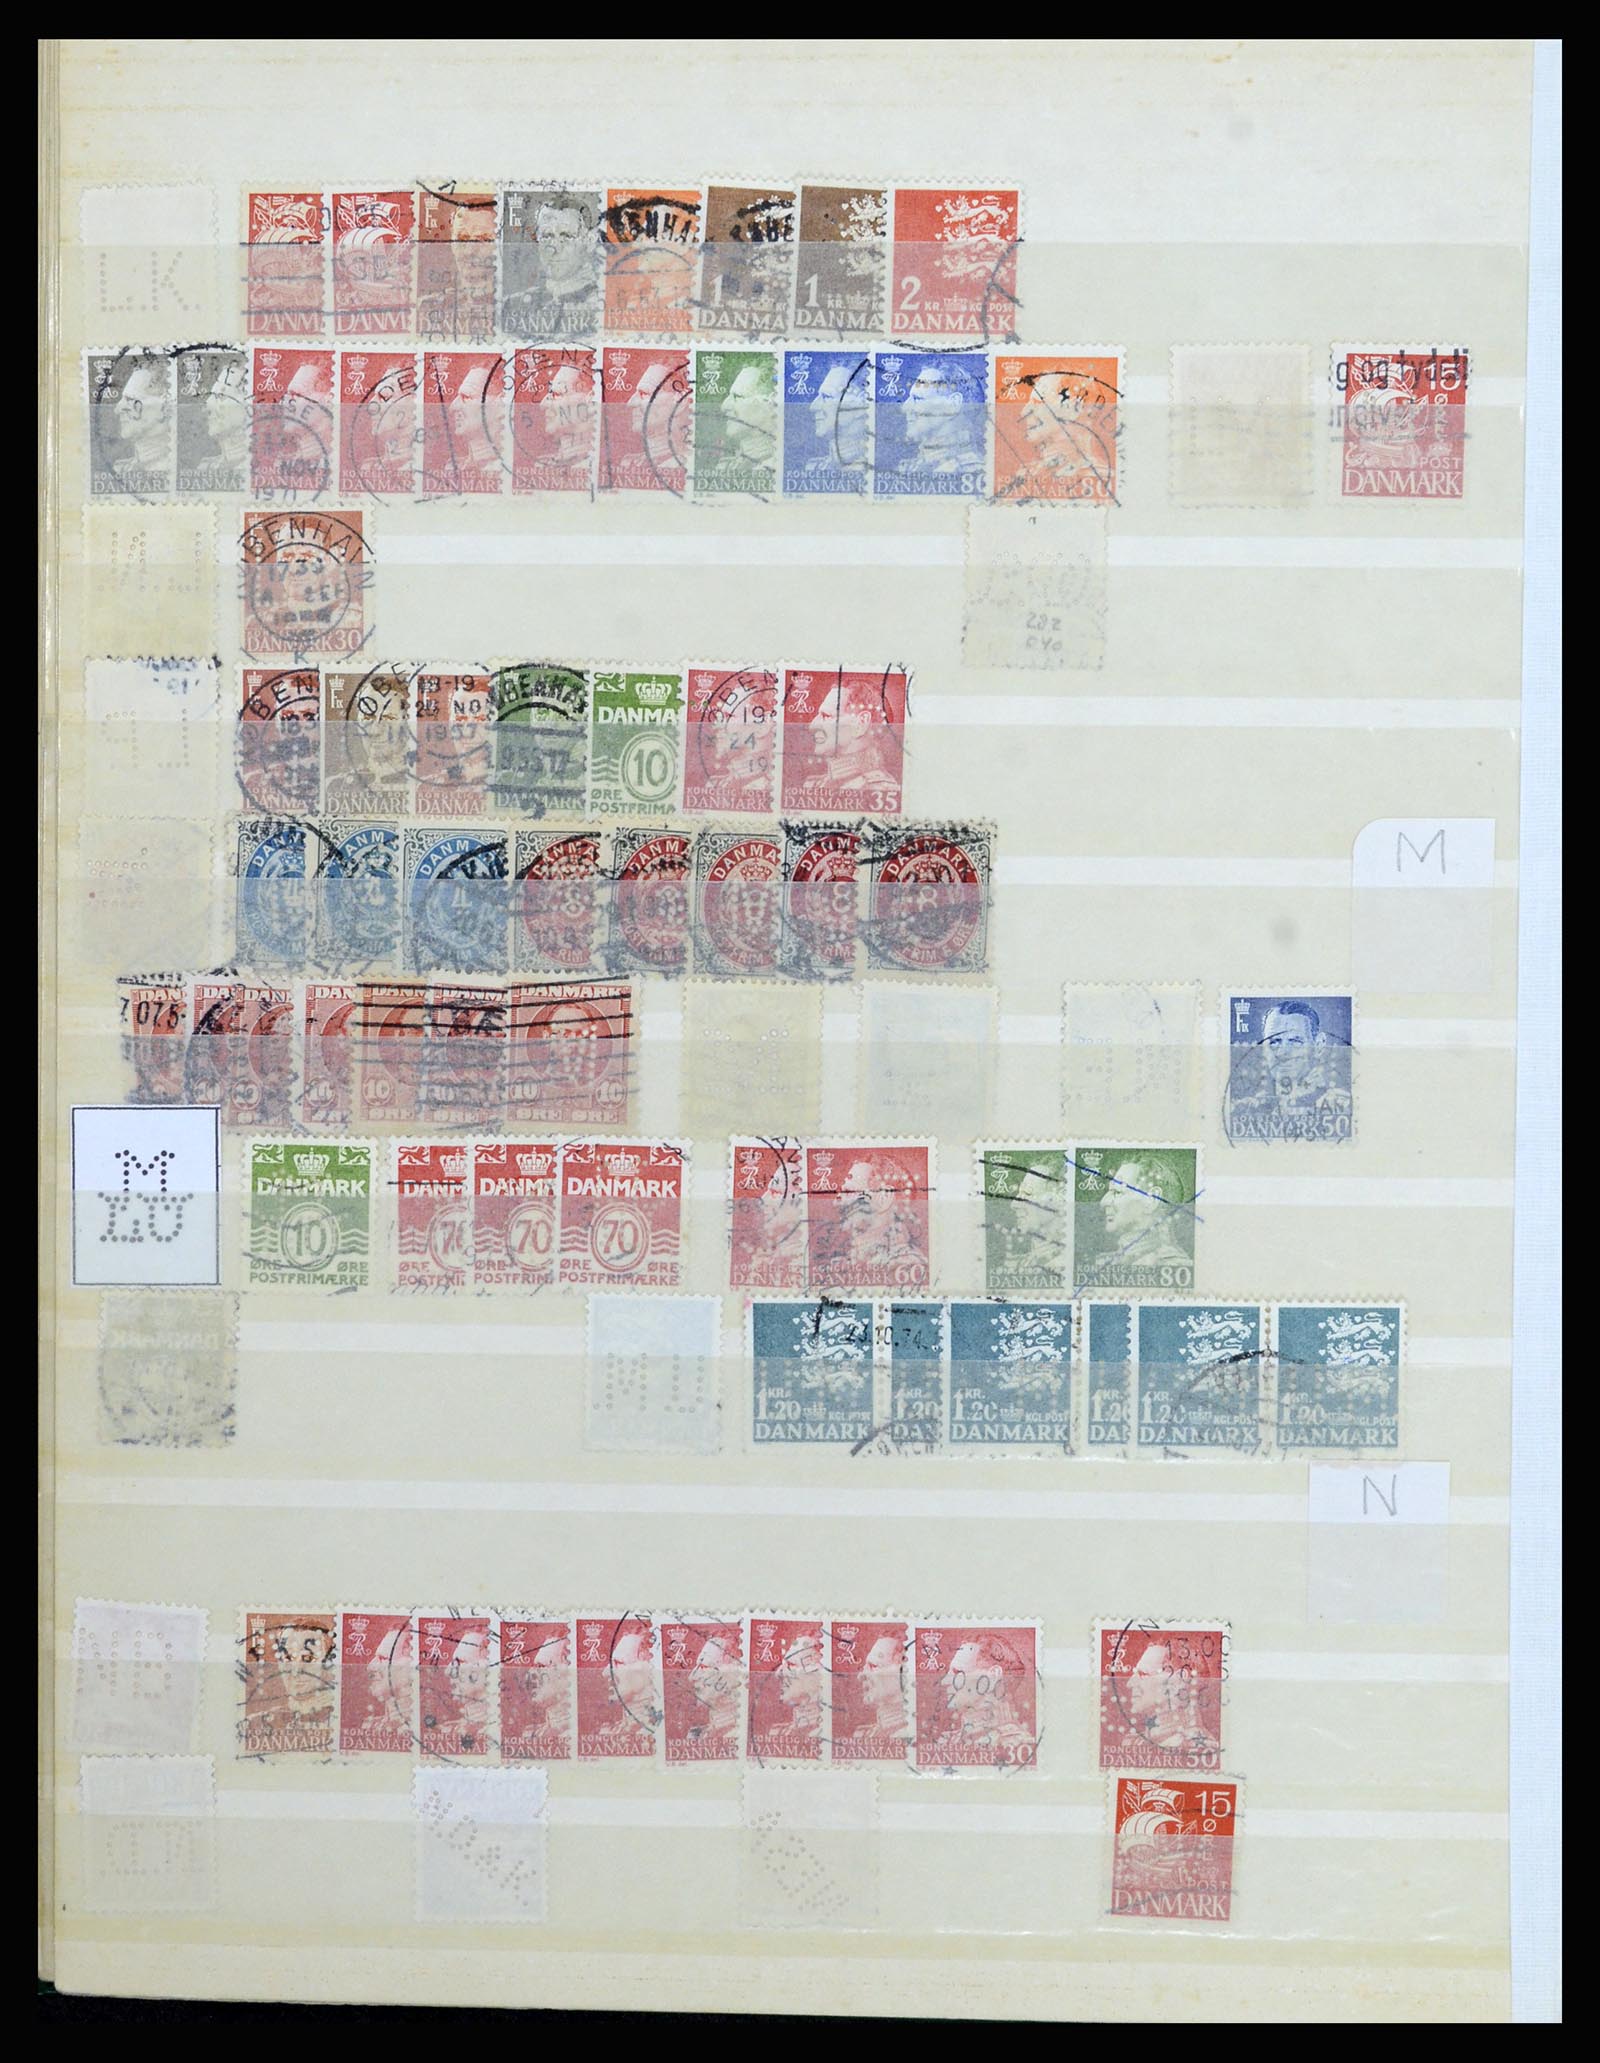 37056 084 - Stamp collection 37056 Denmark perfins.